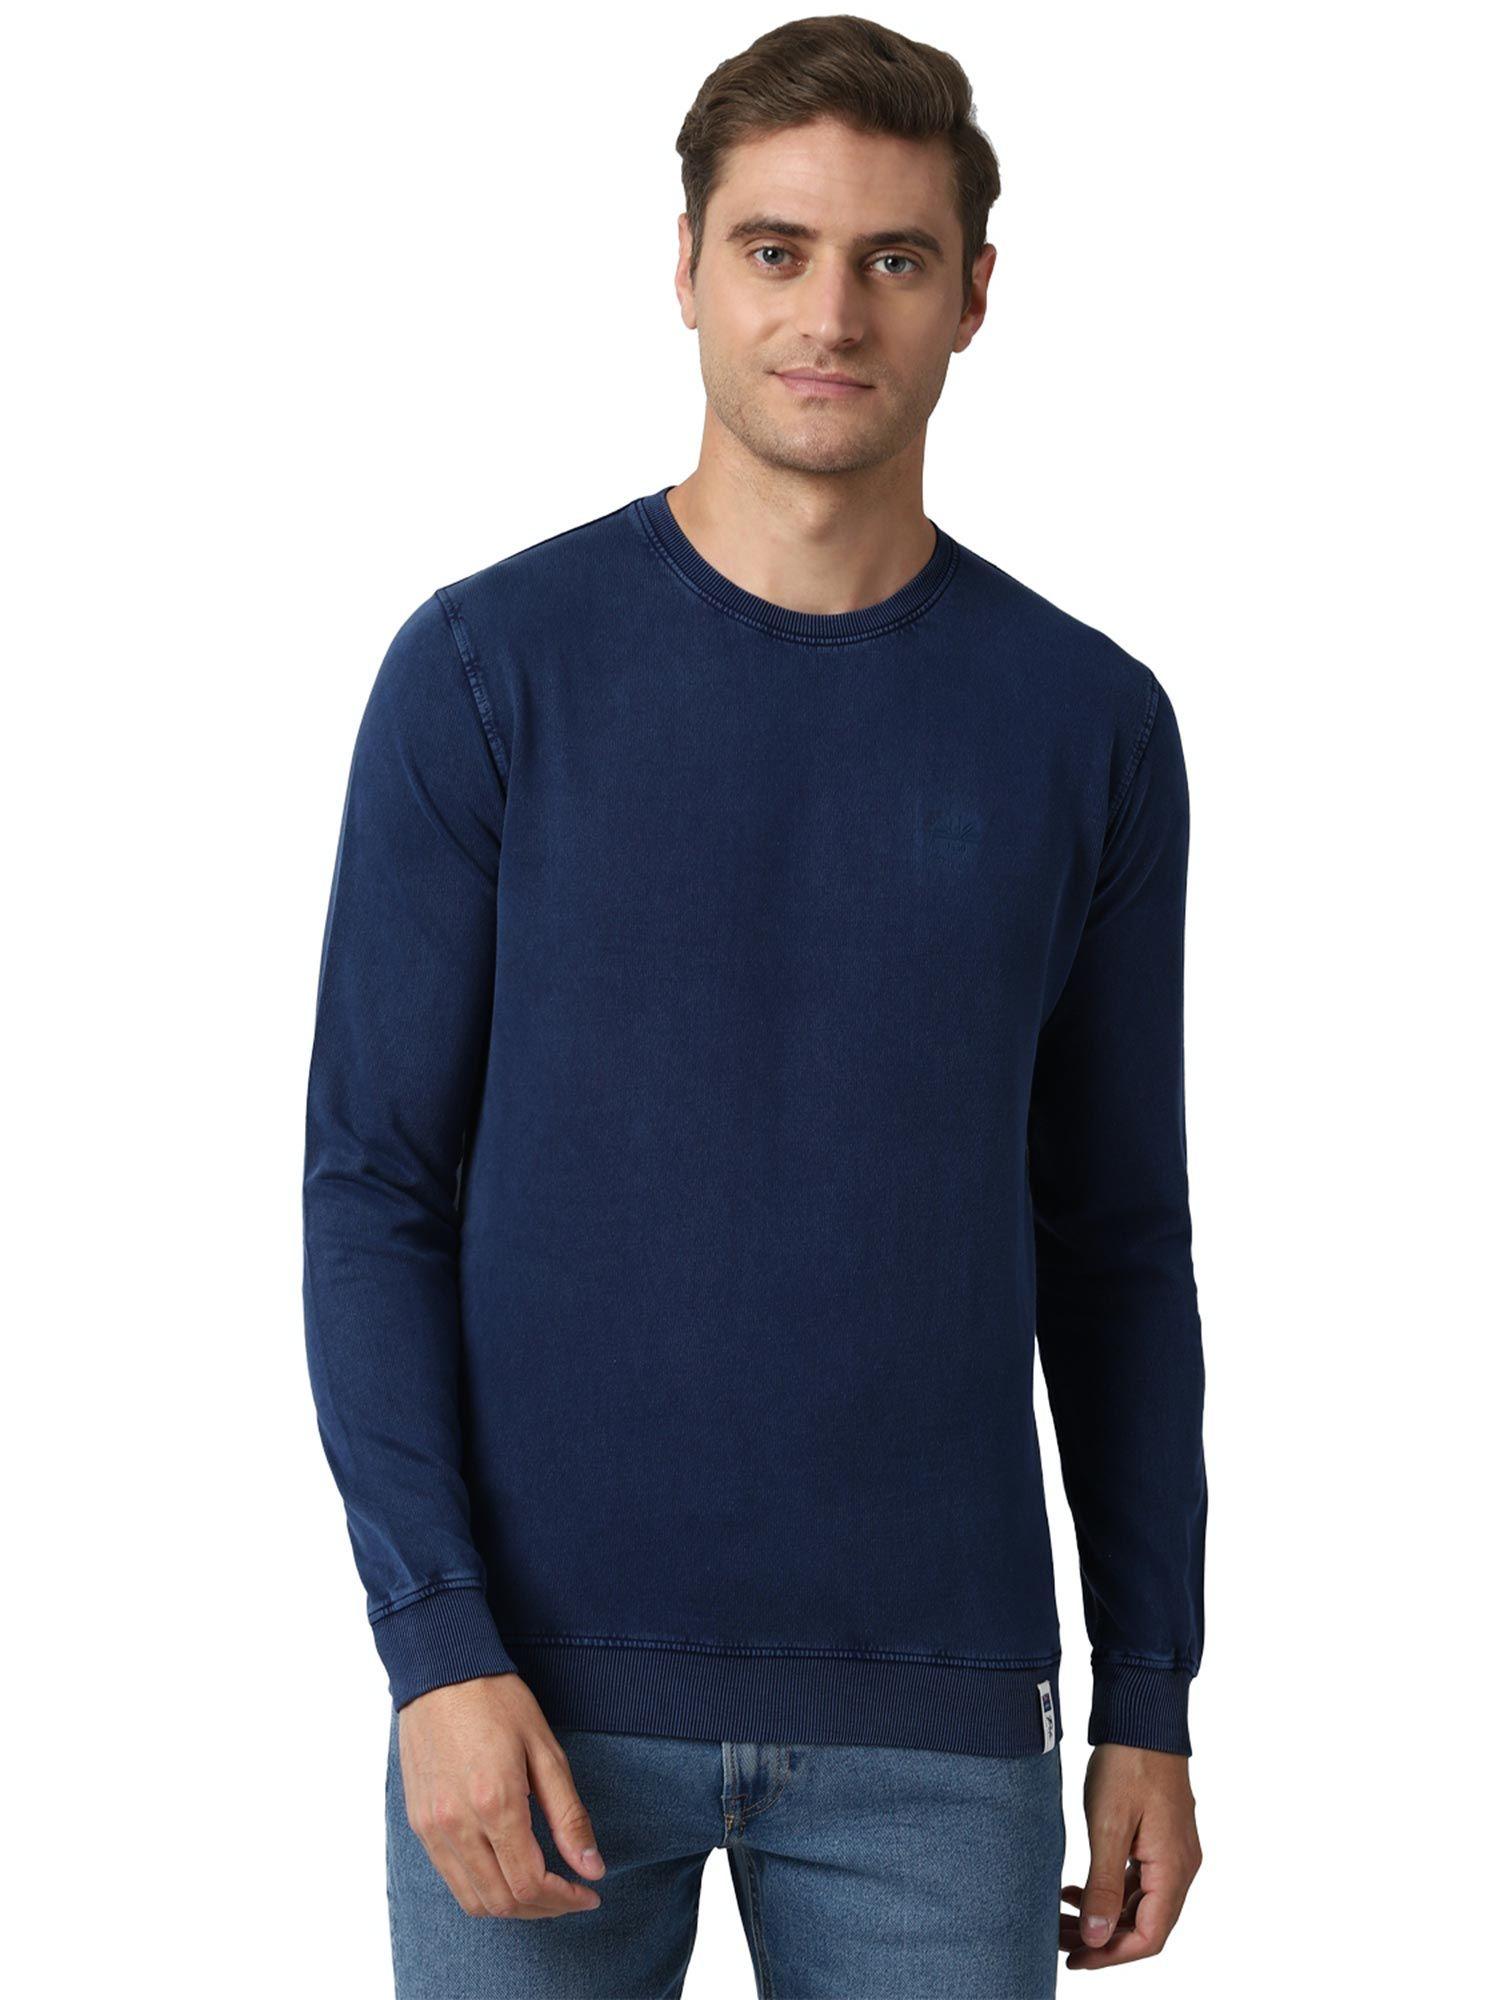 navy blue sweatshirt